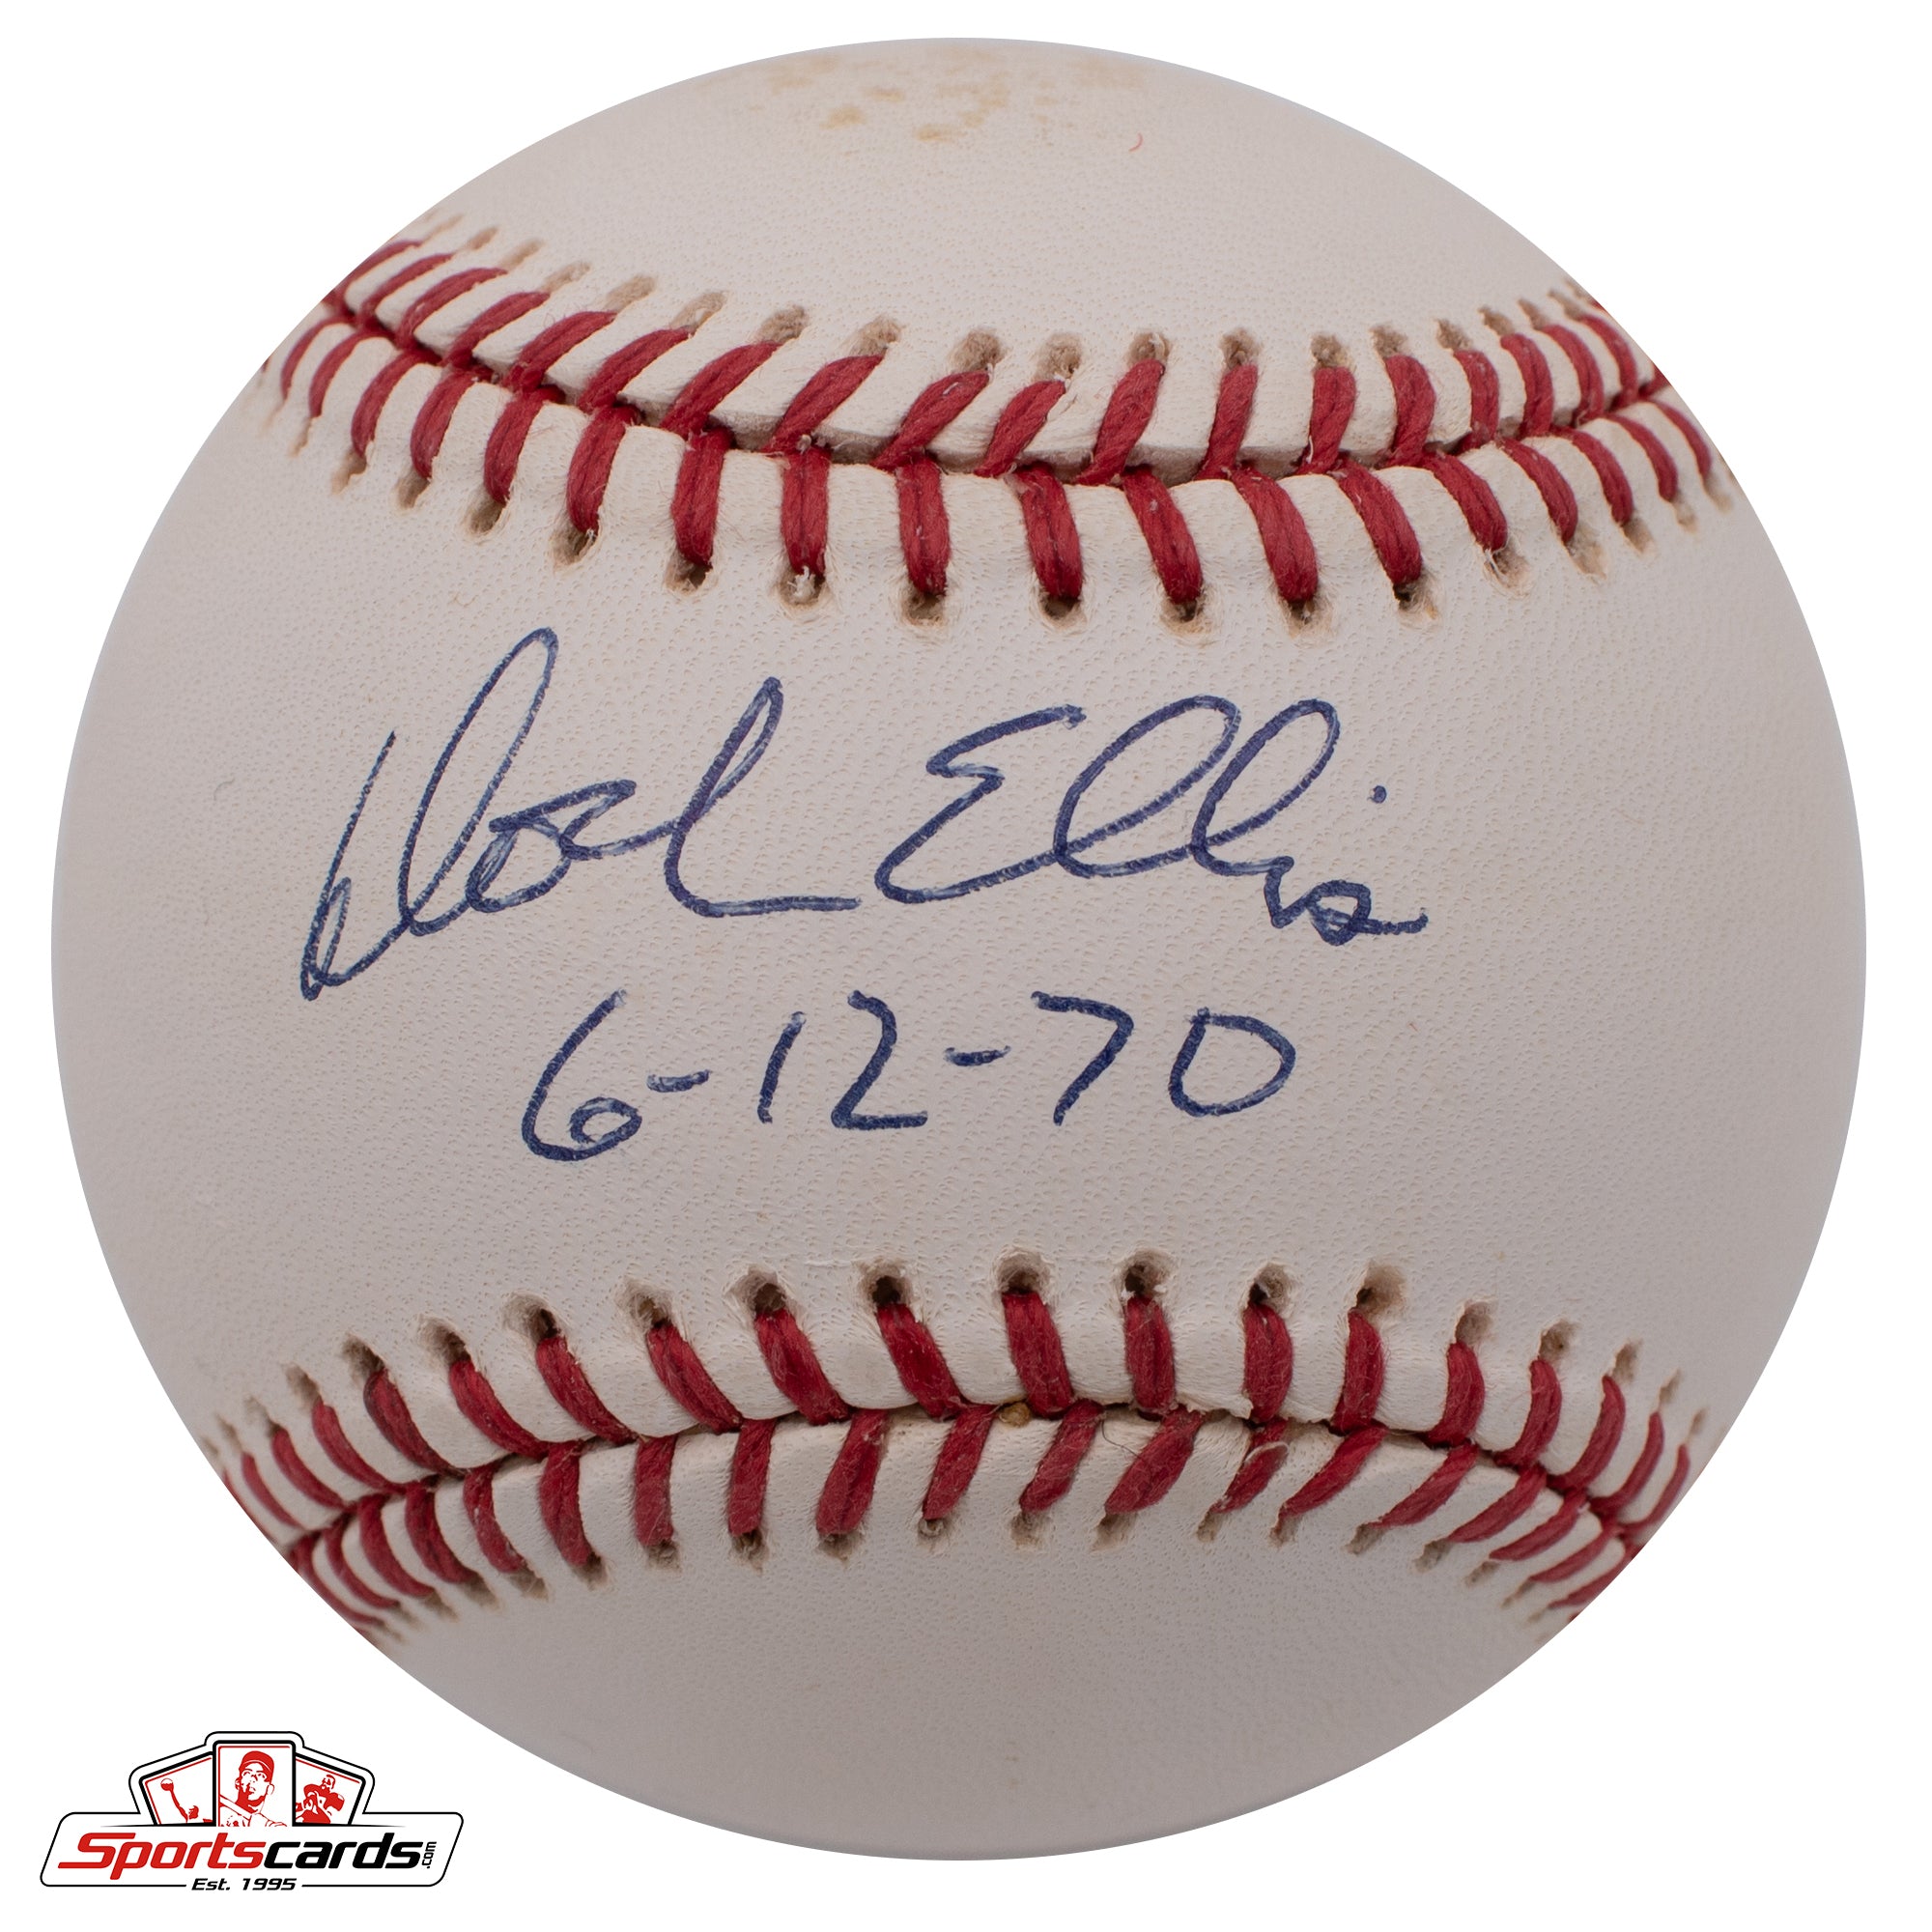 Dock Ellis (d.2008) "6-12-70" Single Signed Baseball Beckett BAS Pirates Yankees